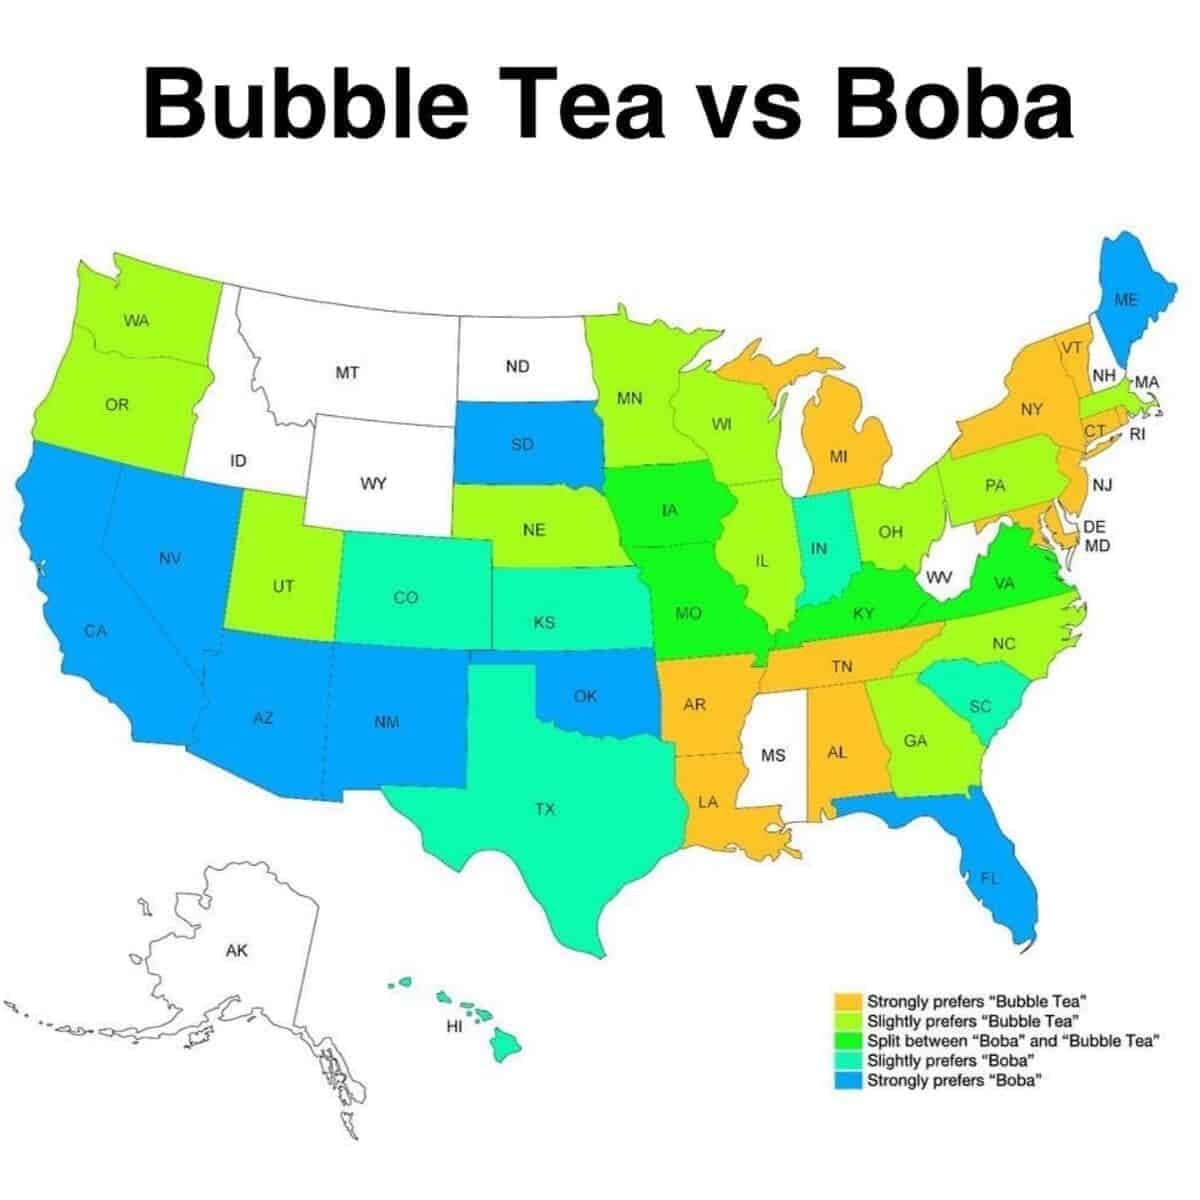 Bubble-tea-vs-boba-infographic.jpg